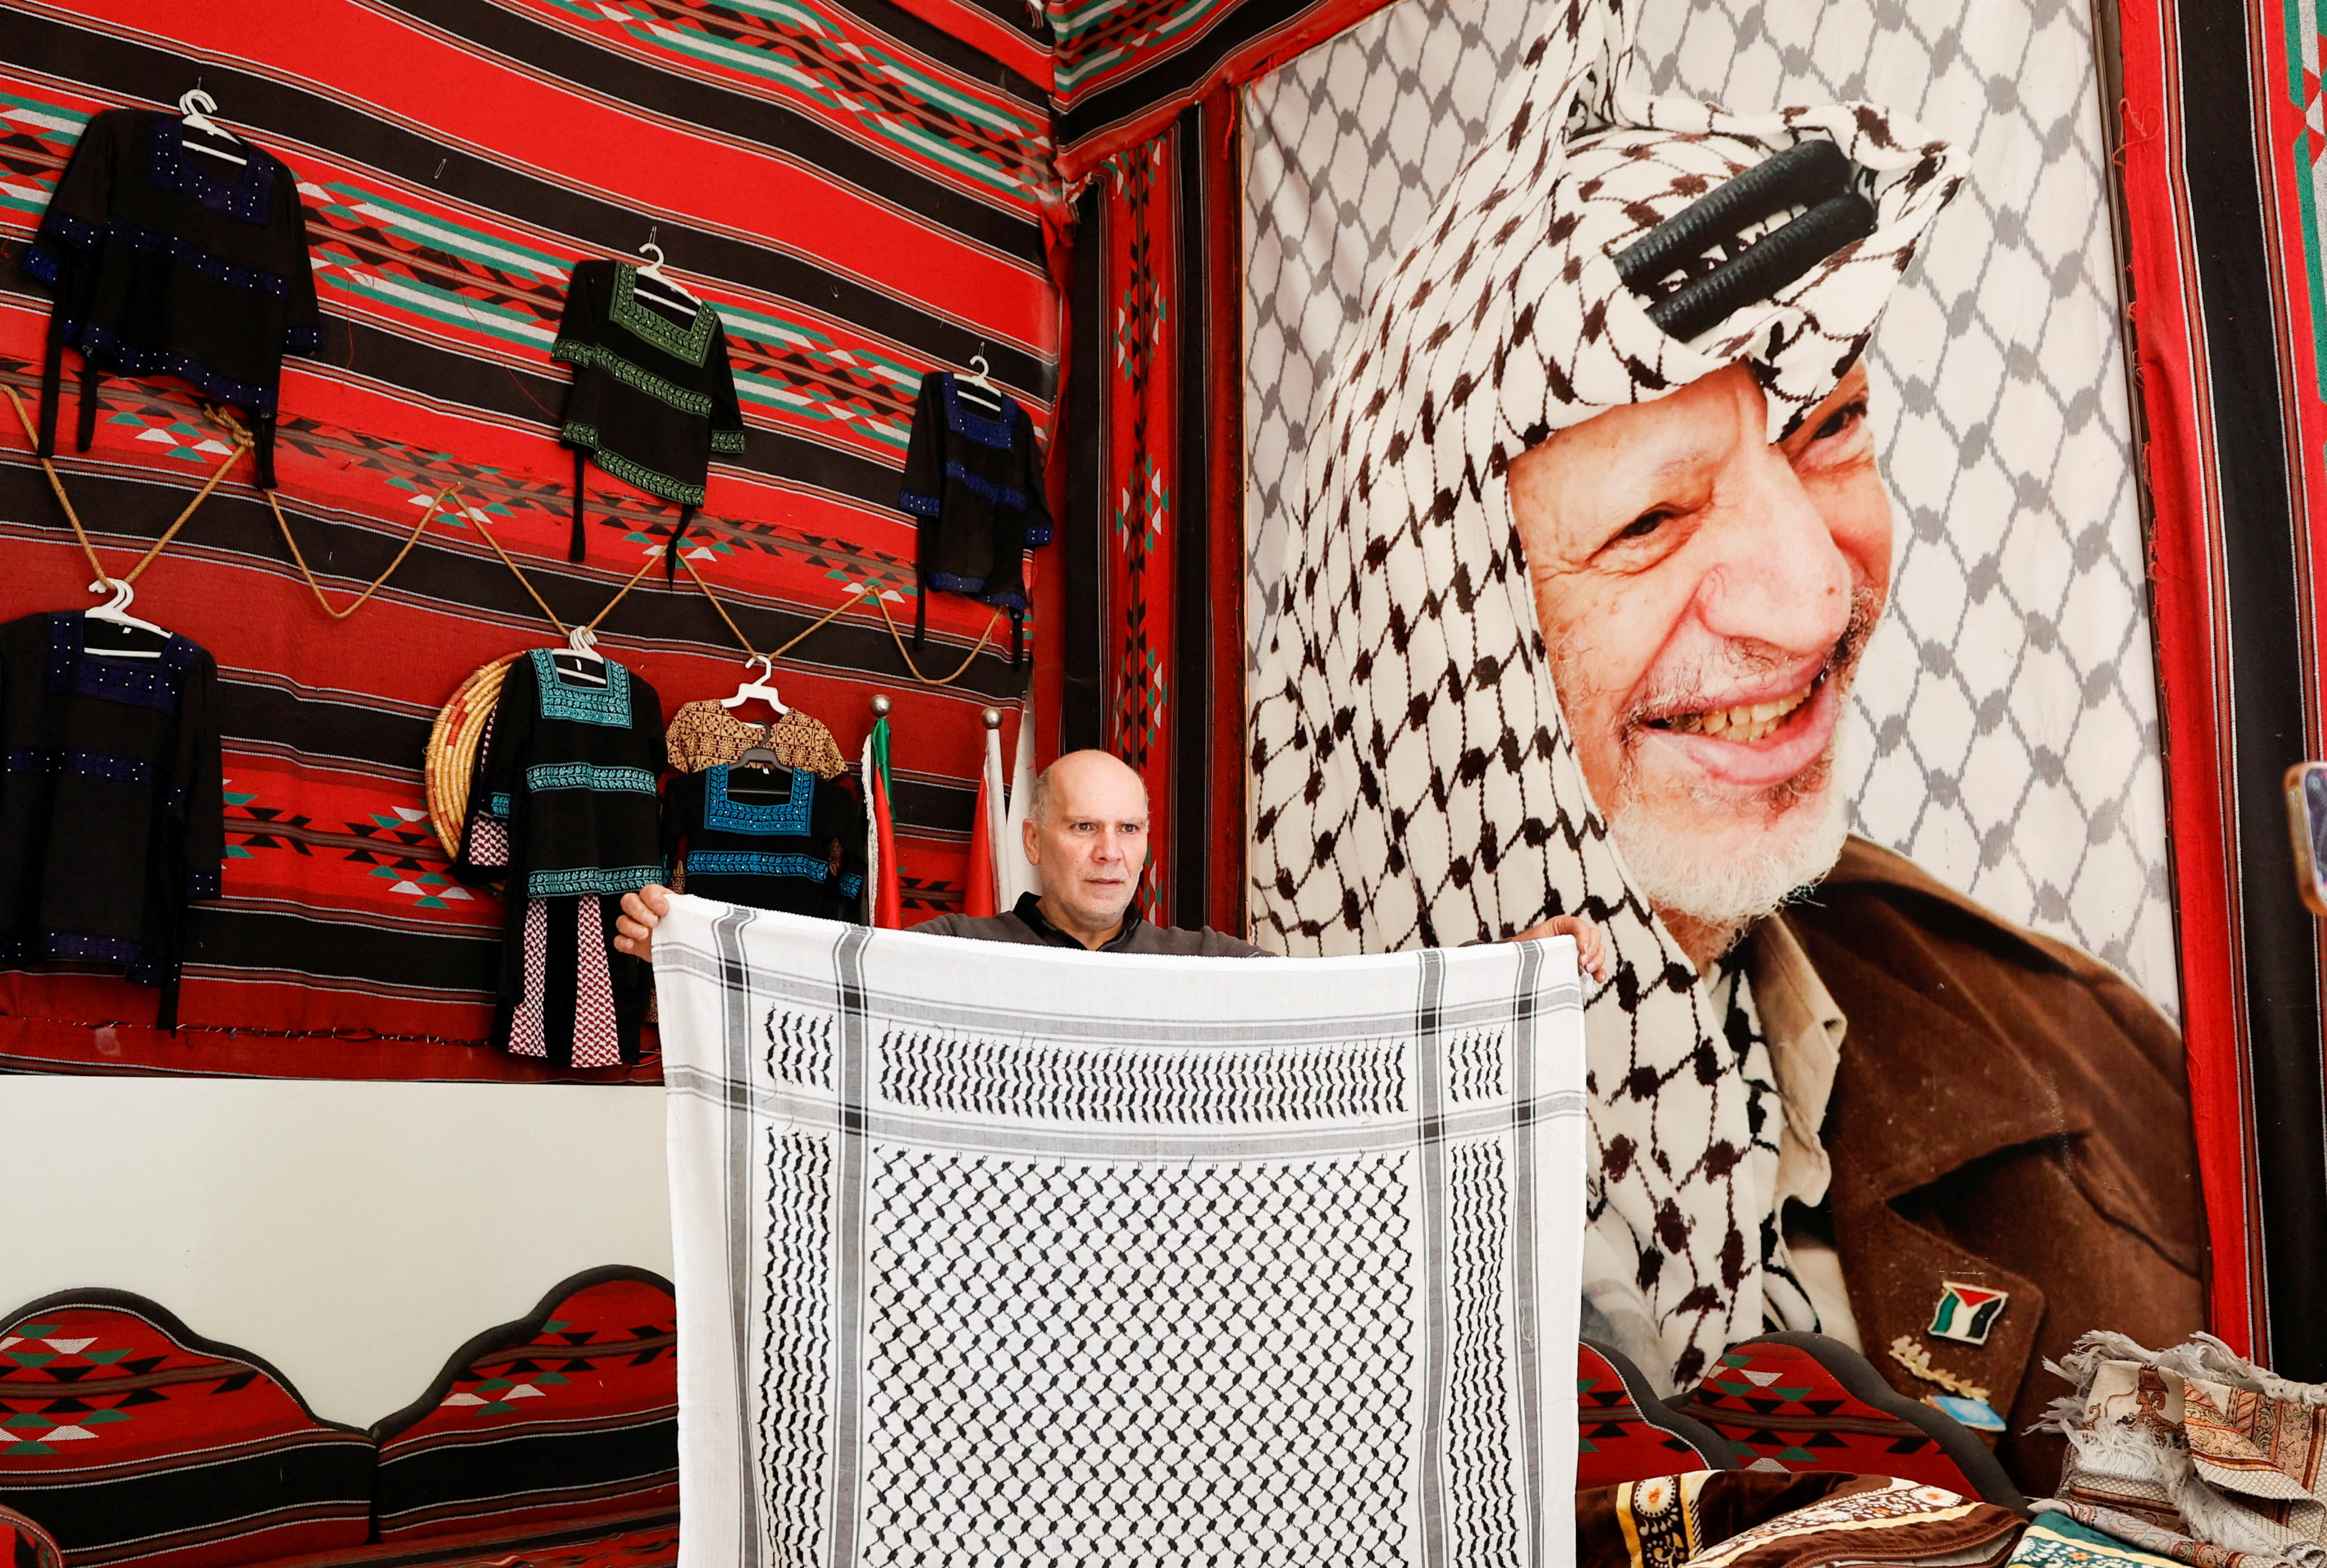 But I'm Not Palestinian, can I wear a kufiya? – HirbawiUSA